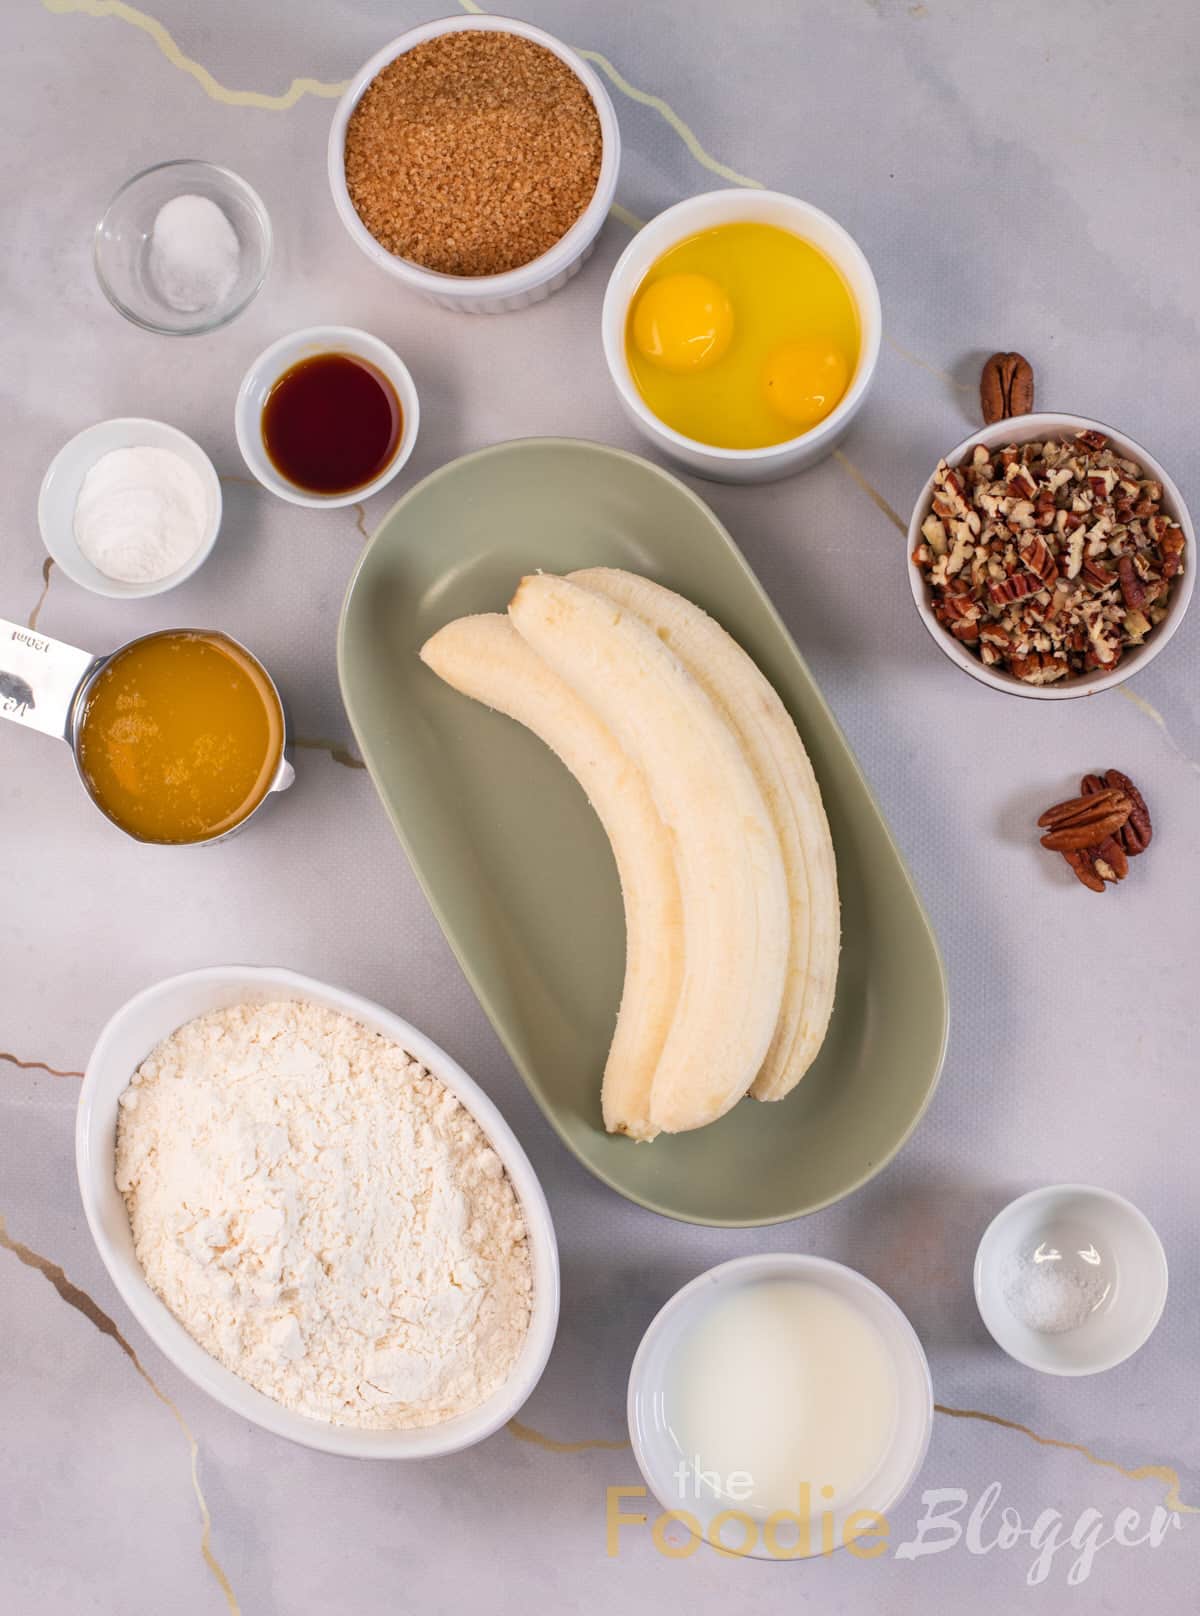 thefoodieblogger banana nut muffins ingredients